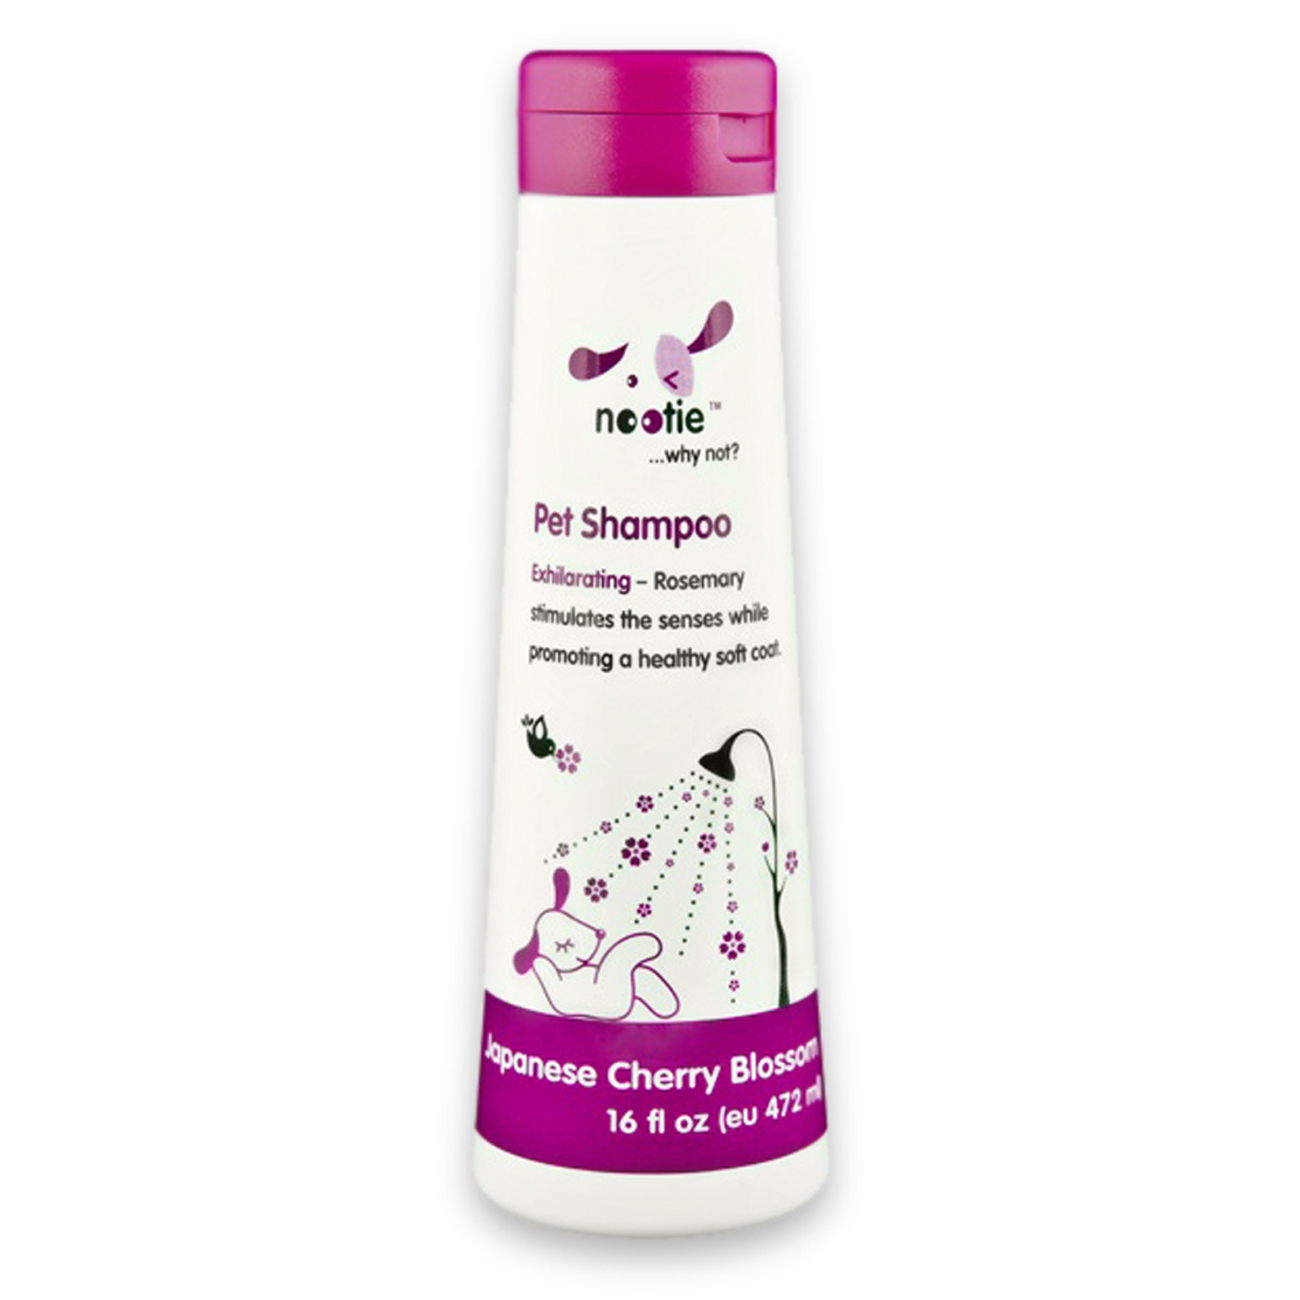 Nootie Exhilarating Shampoo, Japanese Cherry Blossom, 16 oz.